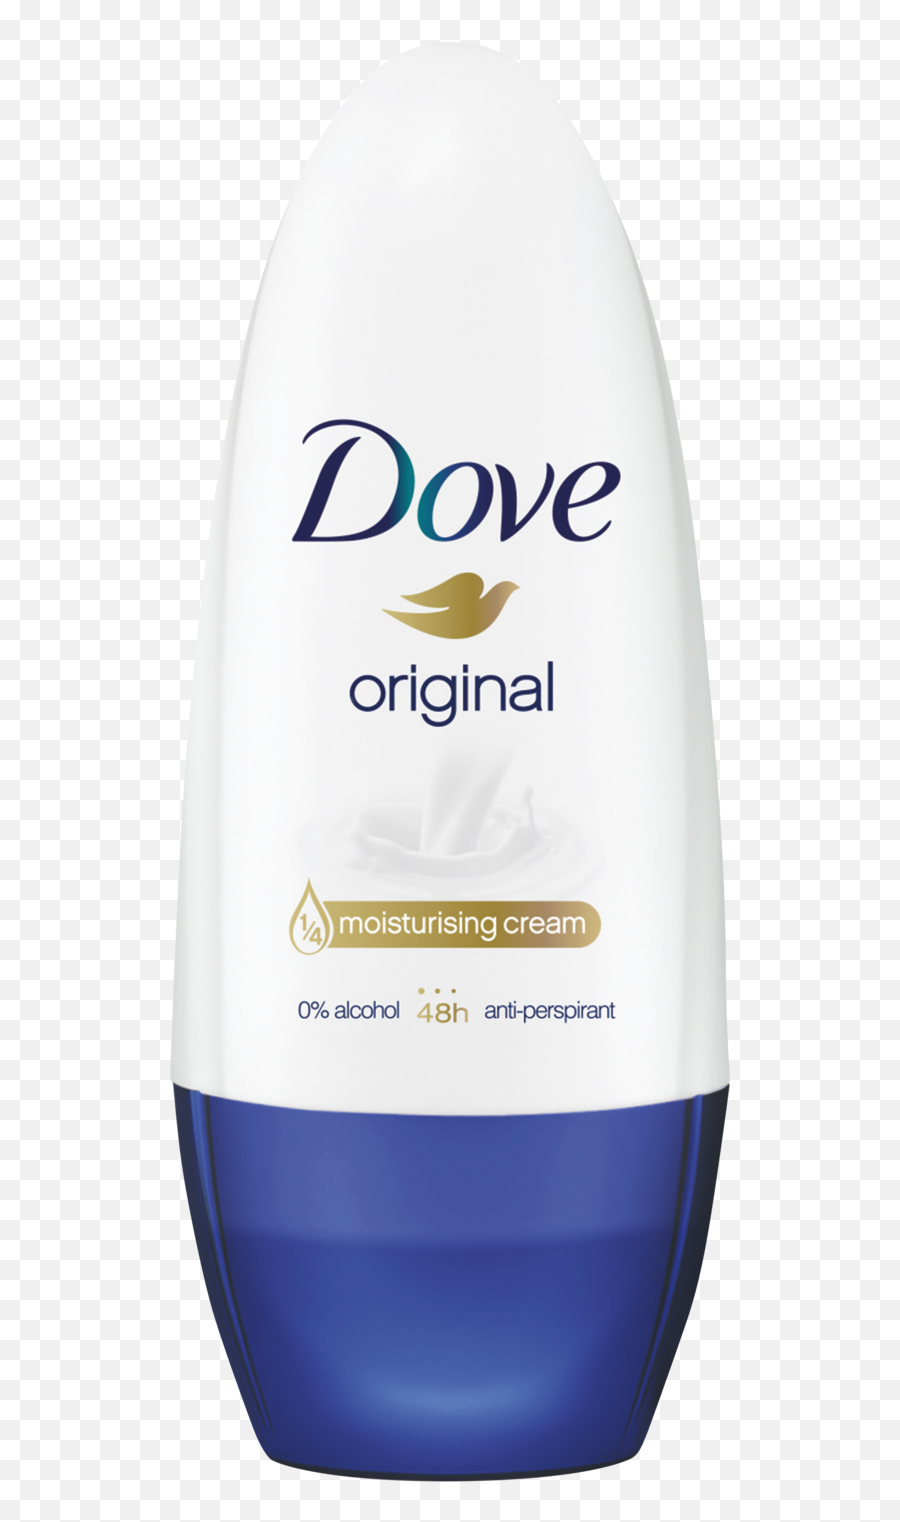 Original Roll Dove Unscented Deodorant Roll Png Deodorant Png Free Transparent Png Images Pngaaa Com